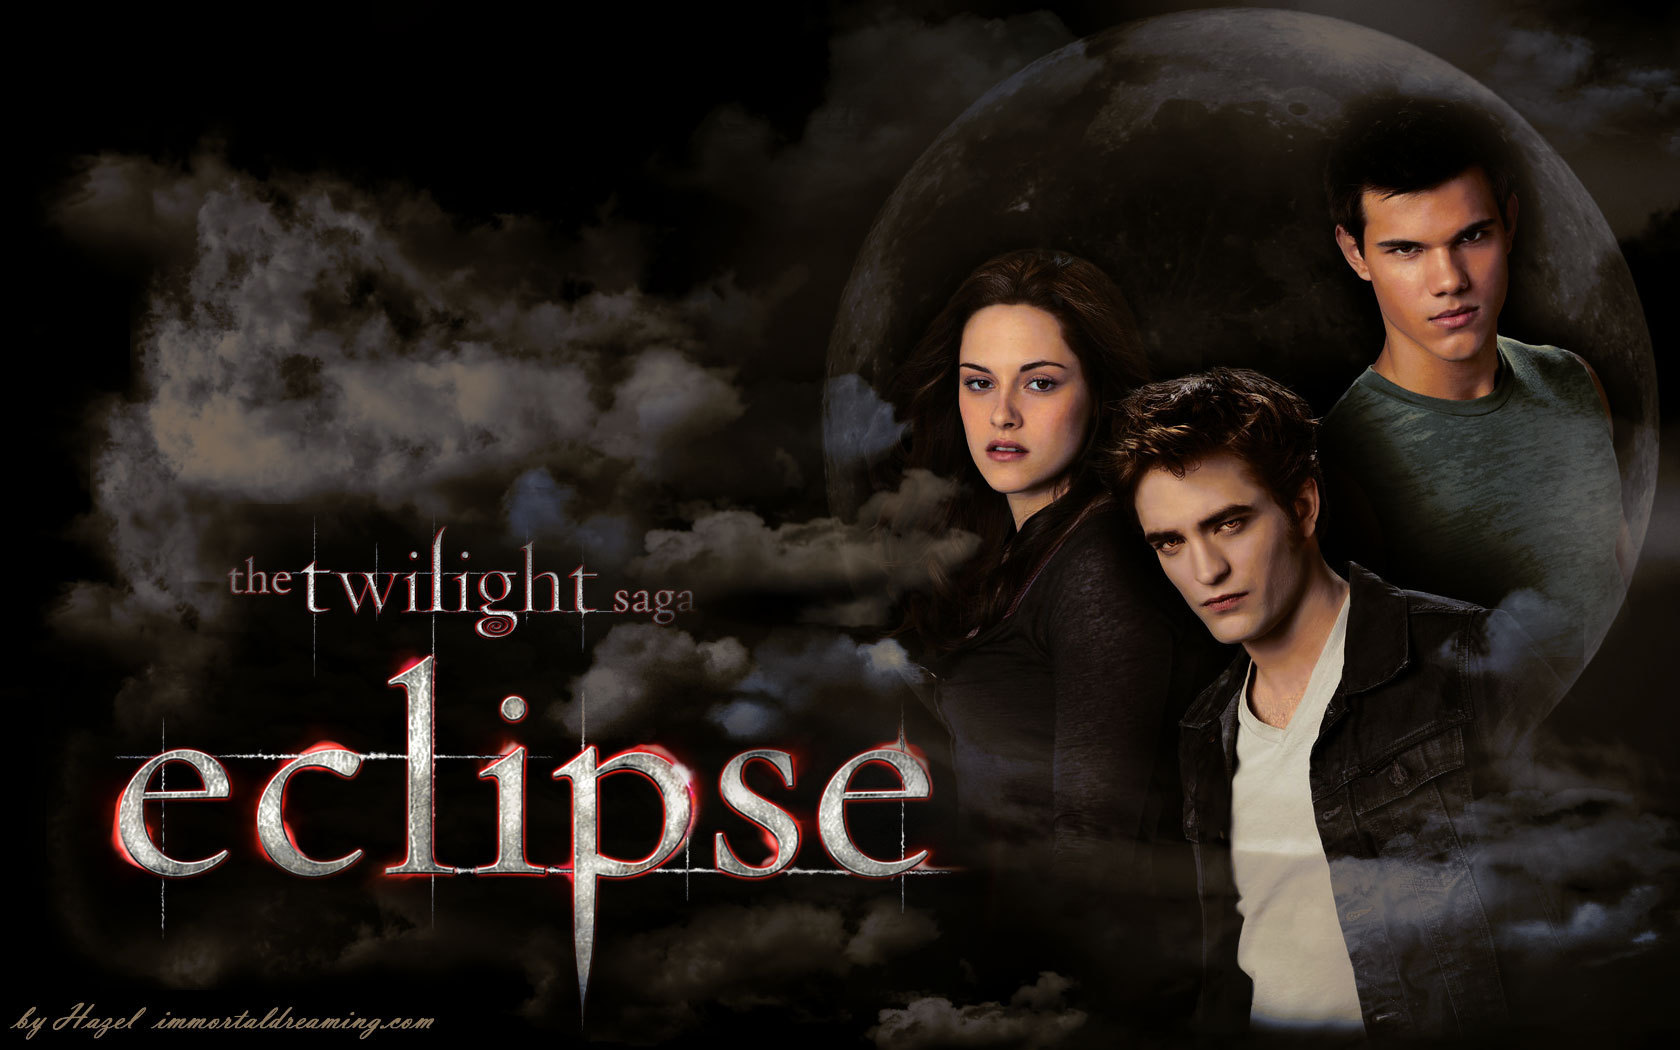 Twilight Series Image Eclipse The Saga HD Wallpaper And